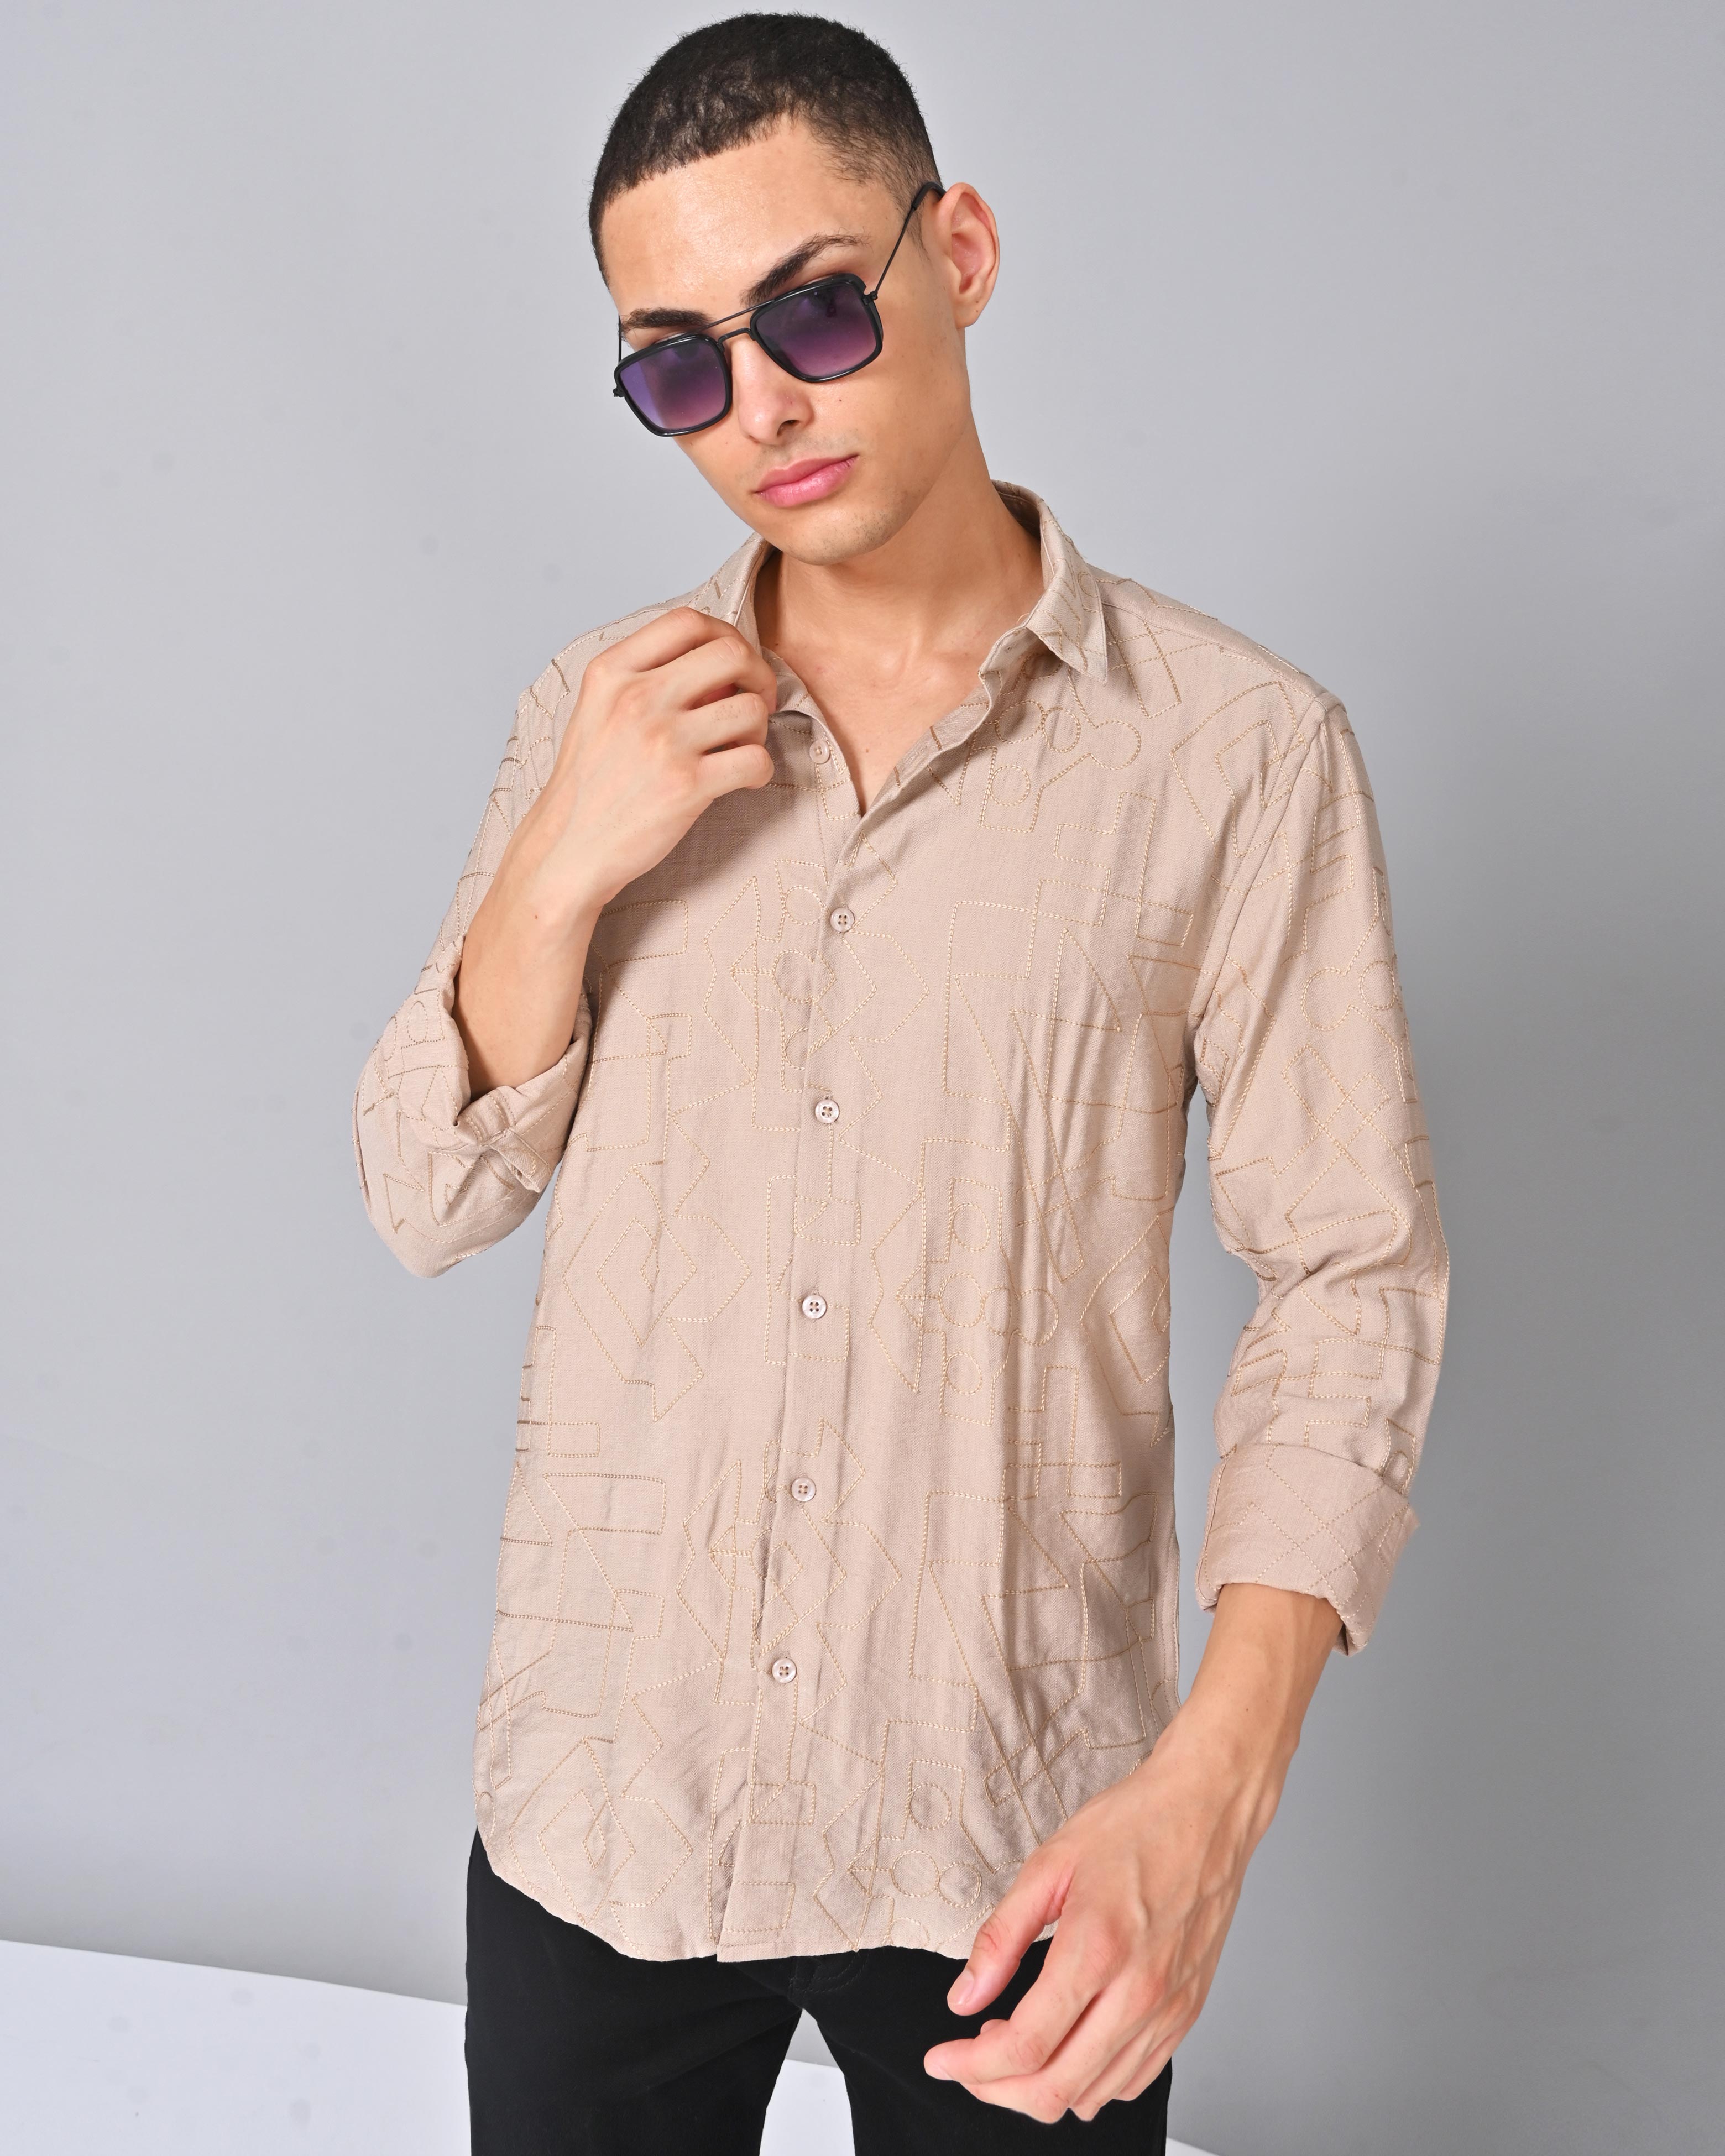 Shop Men's Embroidered Cotton Sand Color Shirt Online